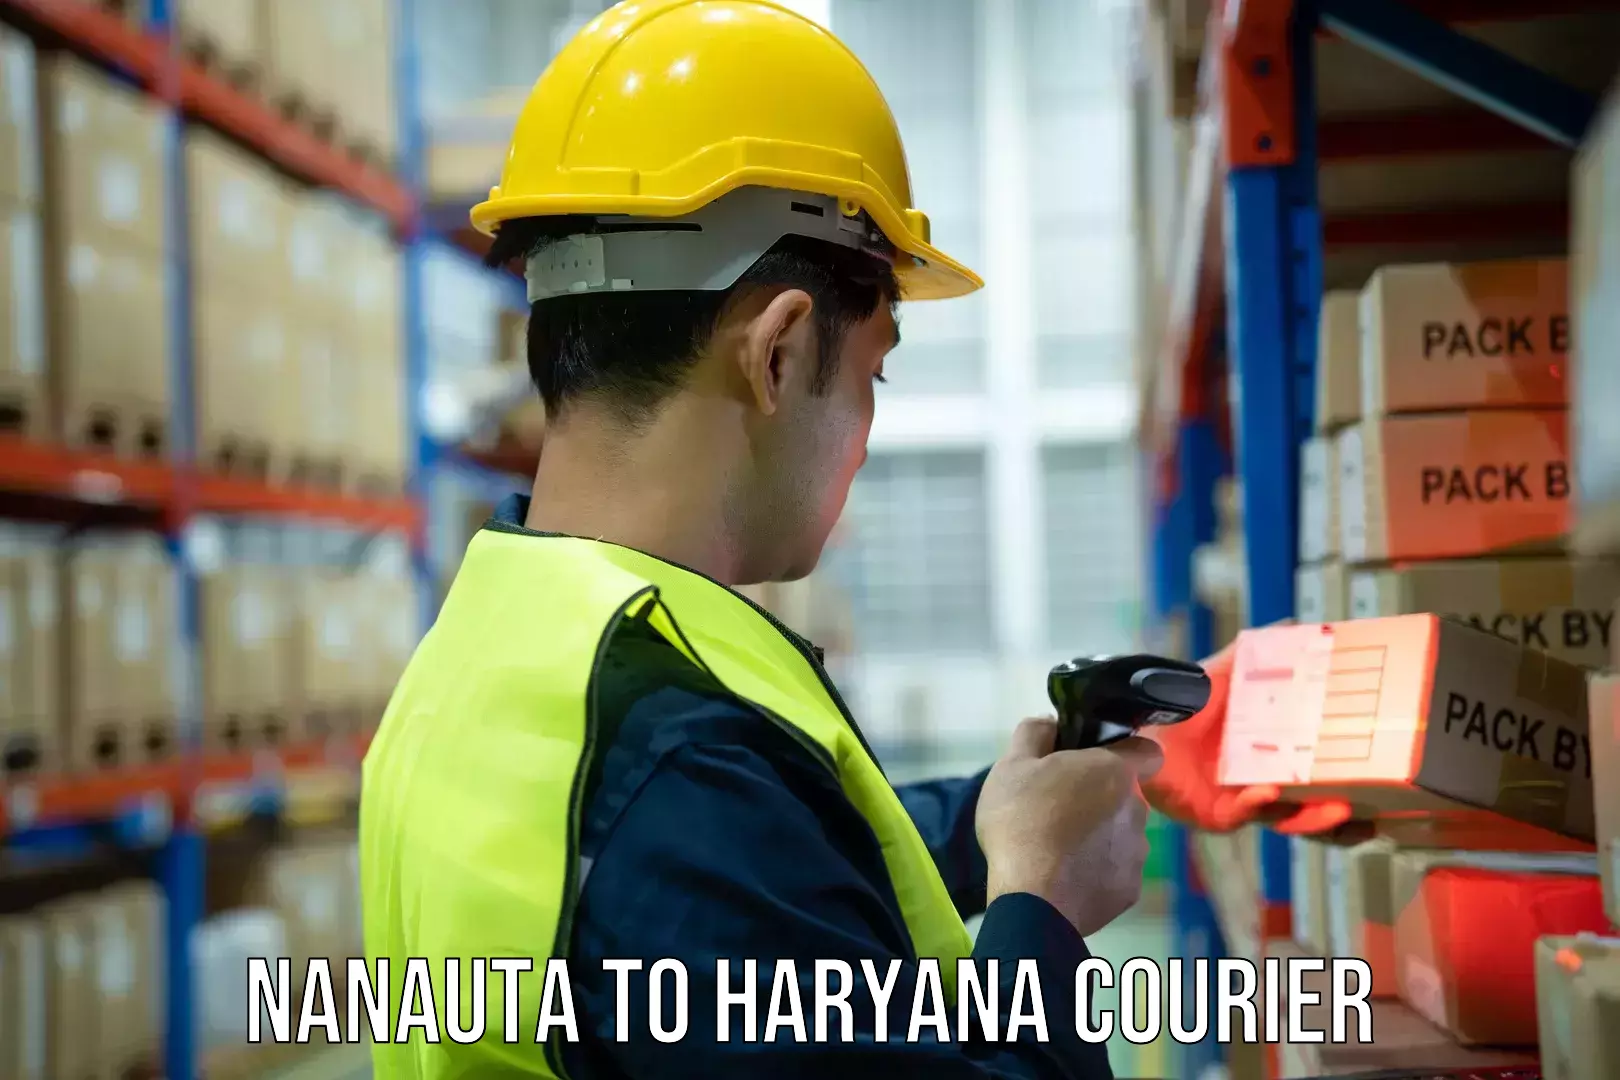 Courier service innovation Nanauta to Odhan